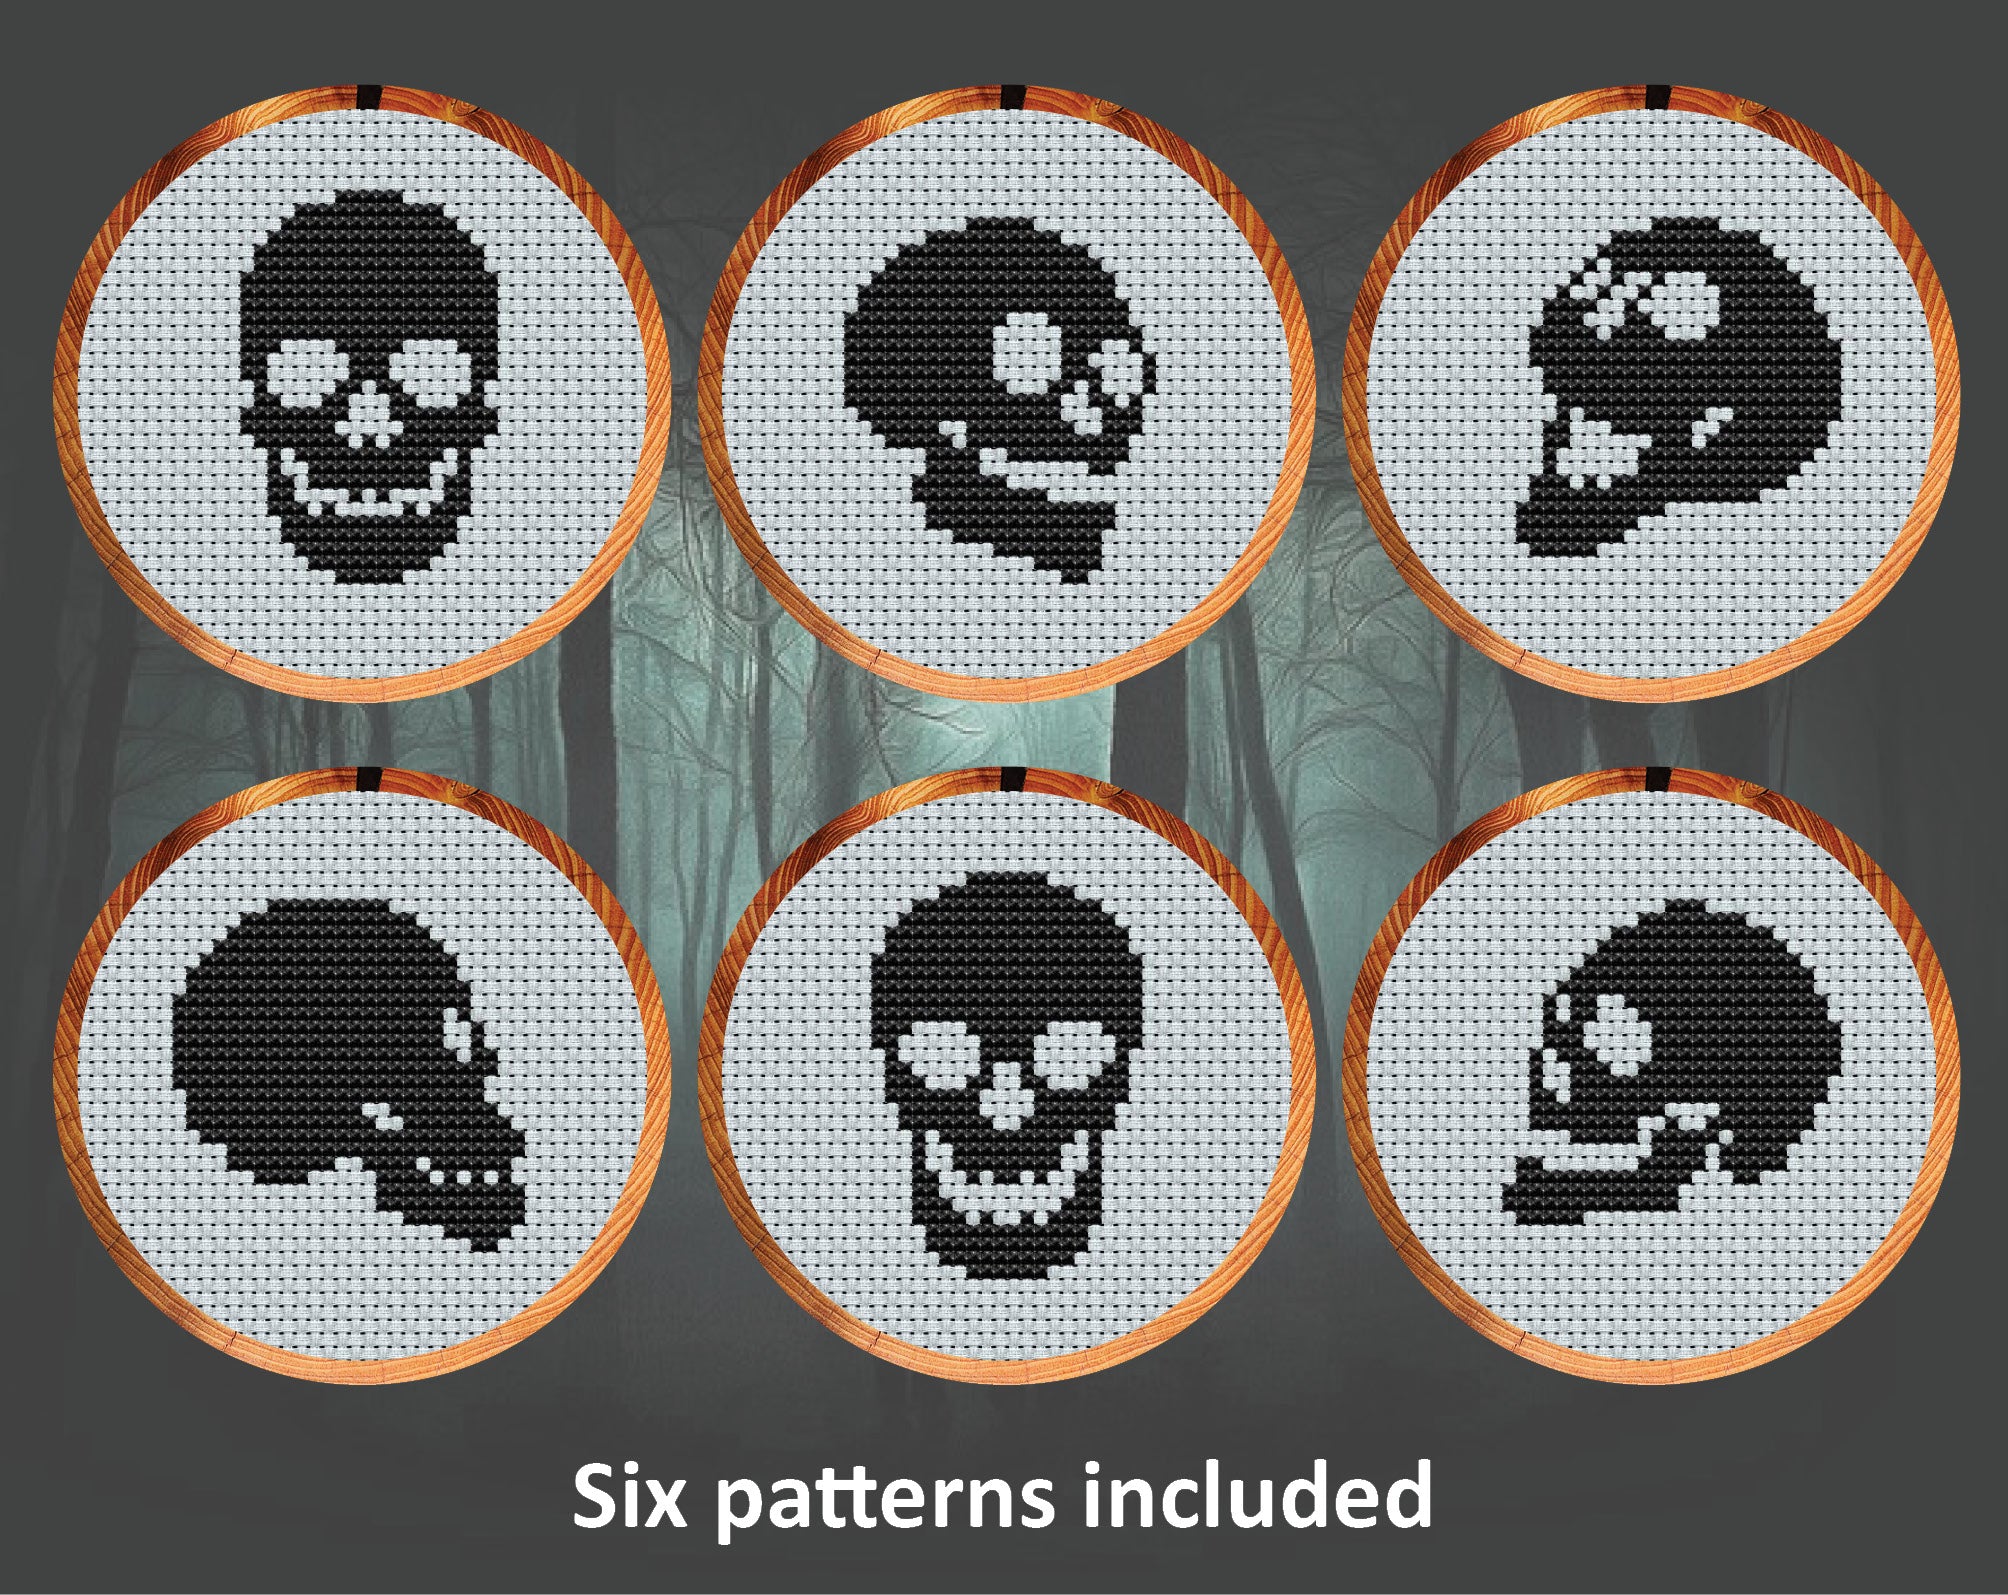 Skull Silhouettes cross stitch patterns. Six mini silhouettes of skulls stitched in black.